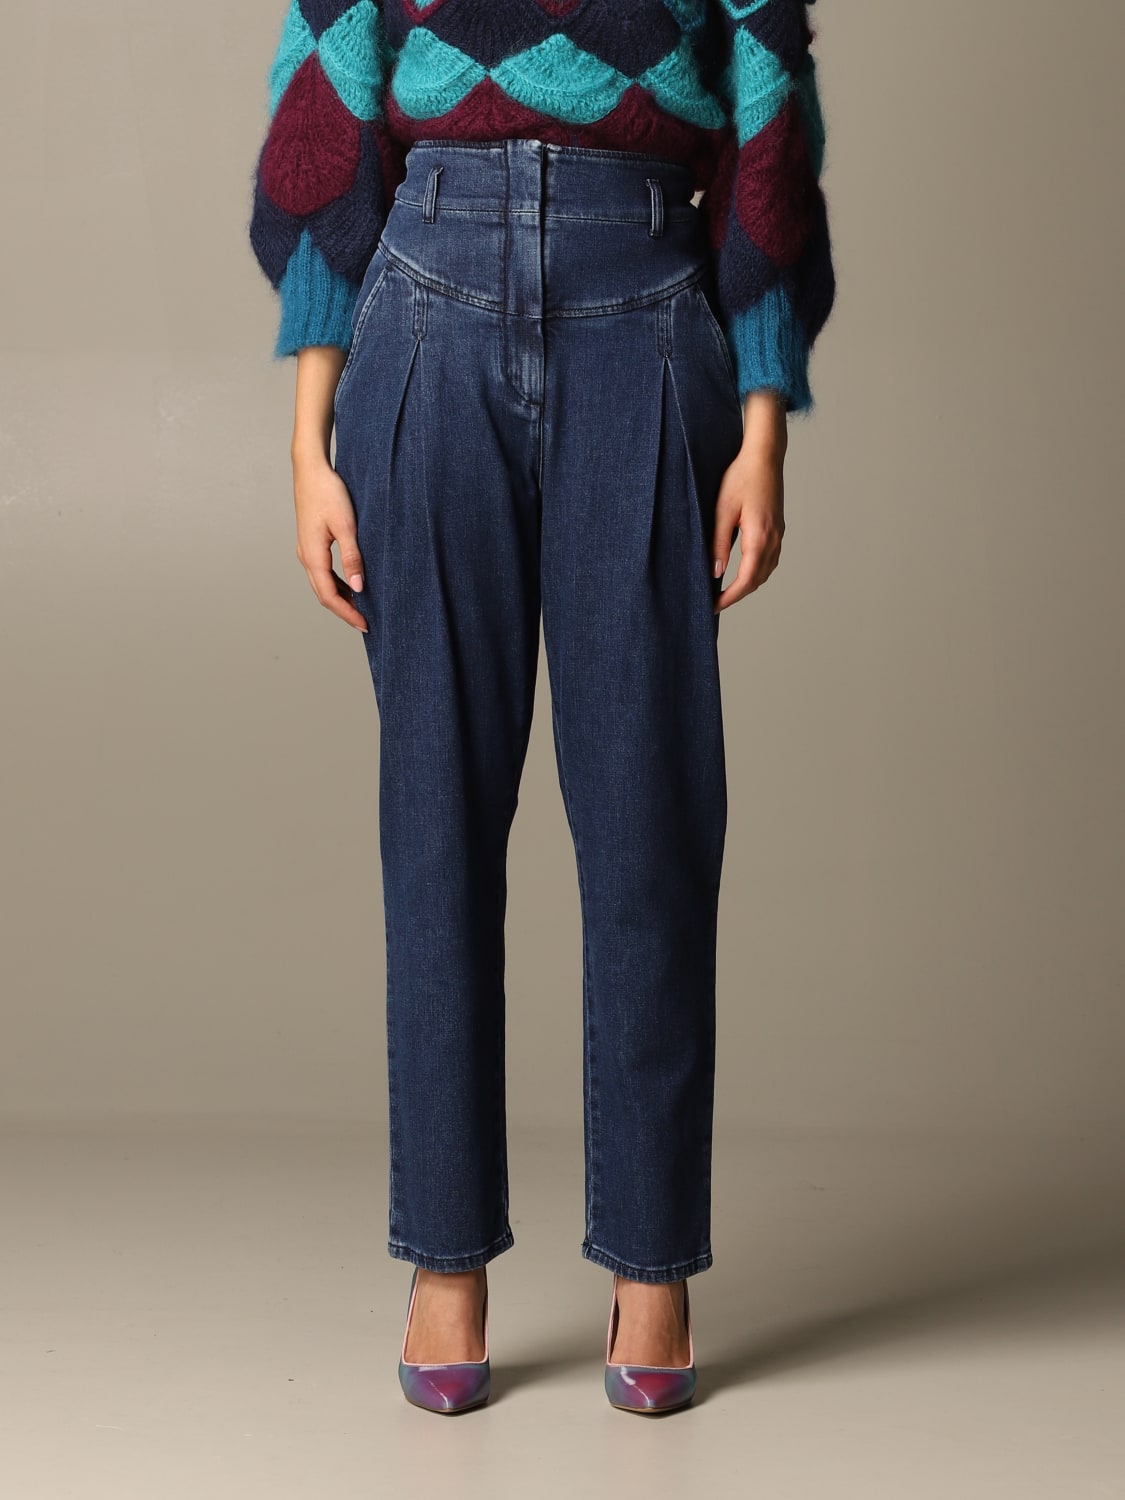 Alberta Ferretti high-waisted carrot jeans